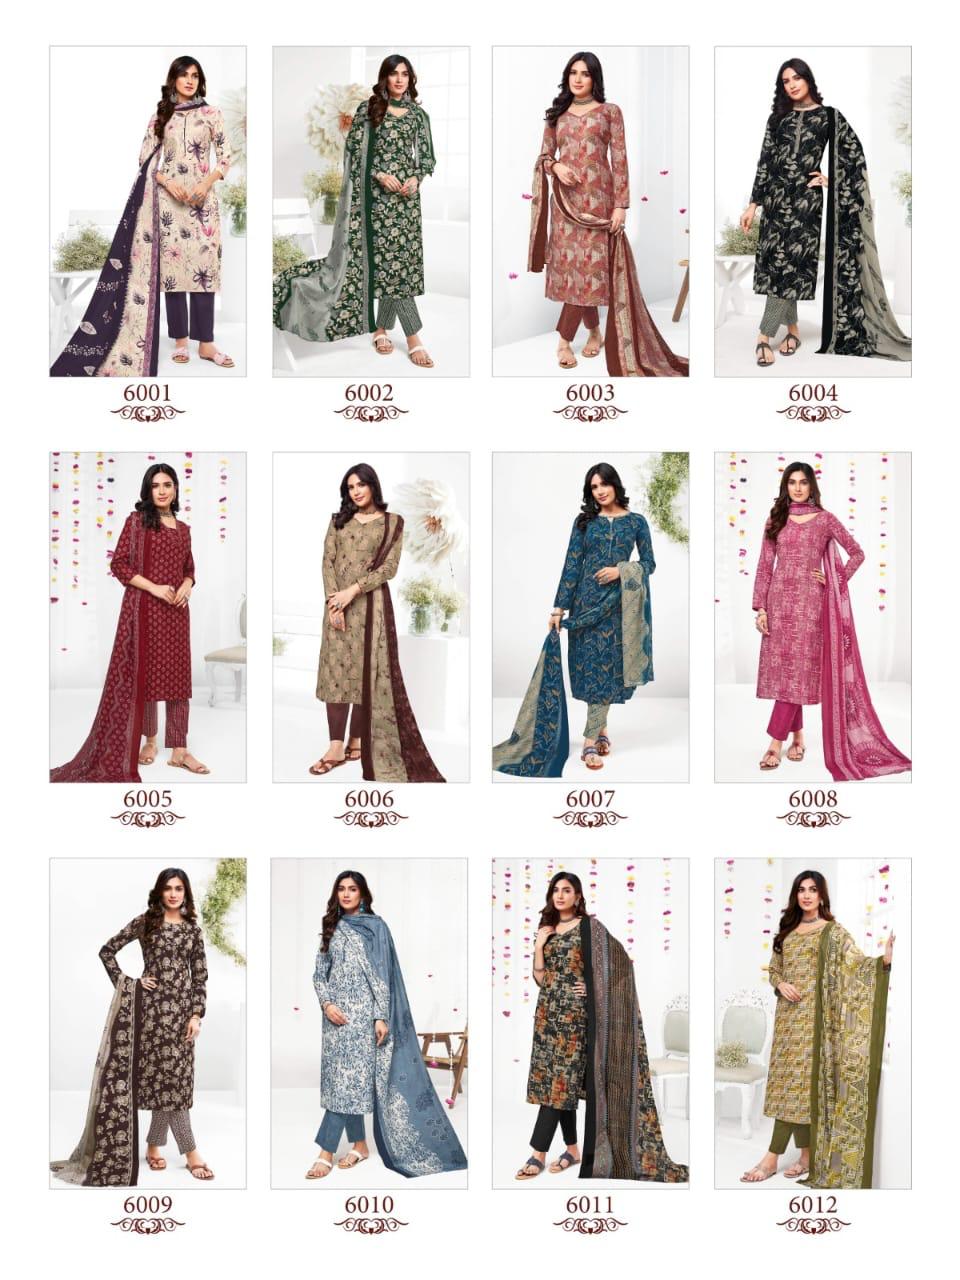 Suryajyoti trendy cotton vol 60 cotton printed dress material wholesale supplier